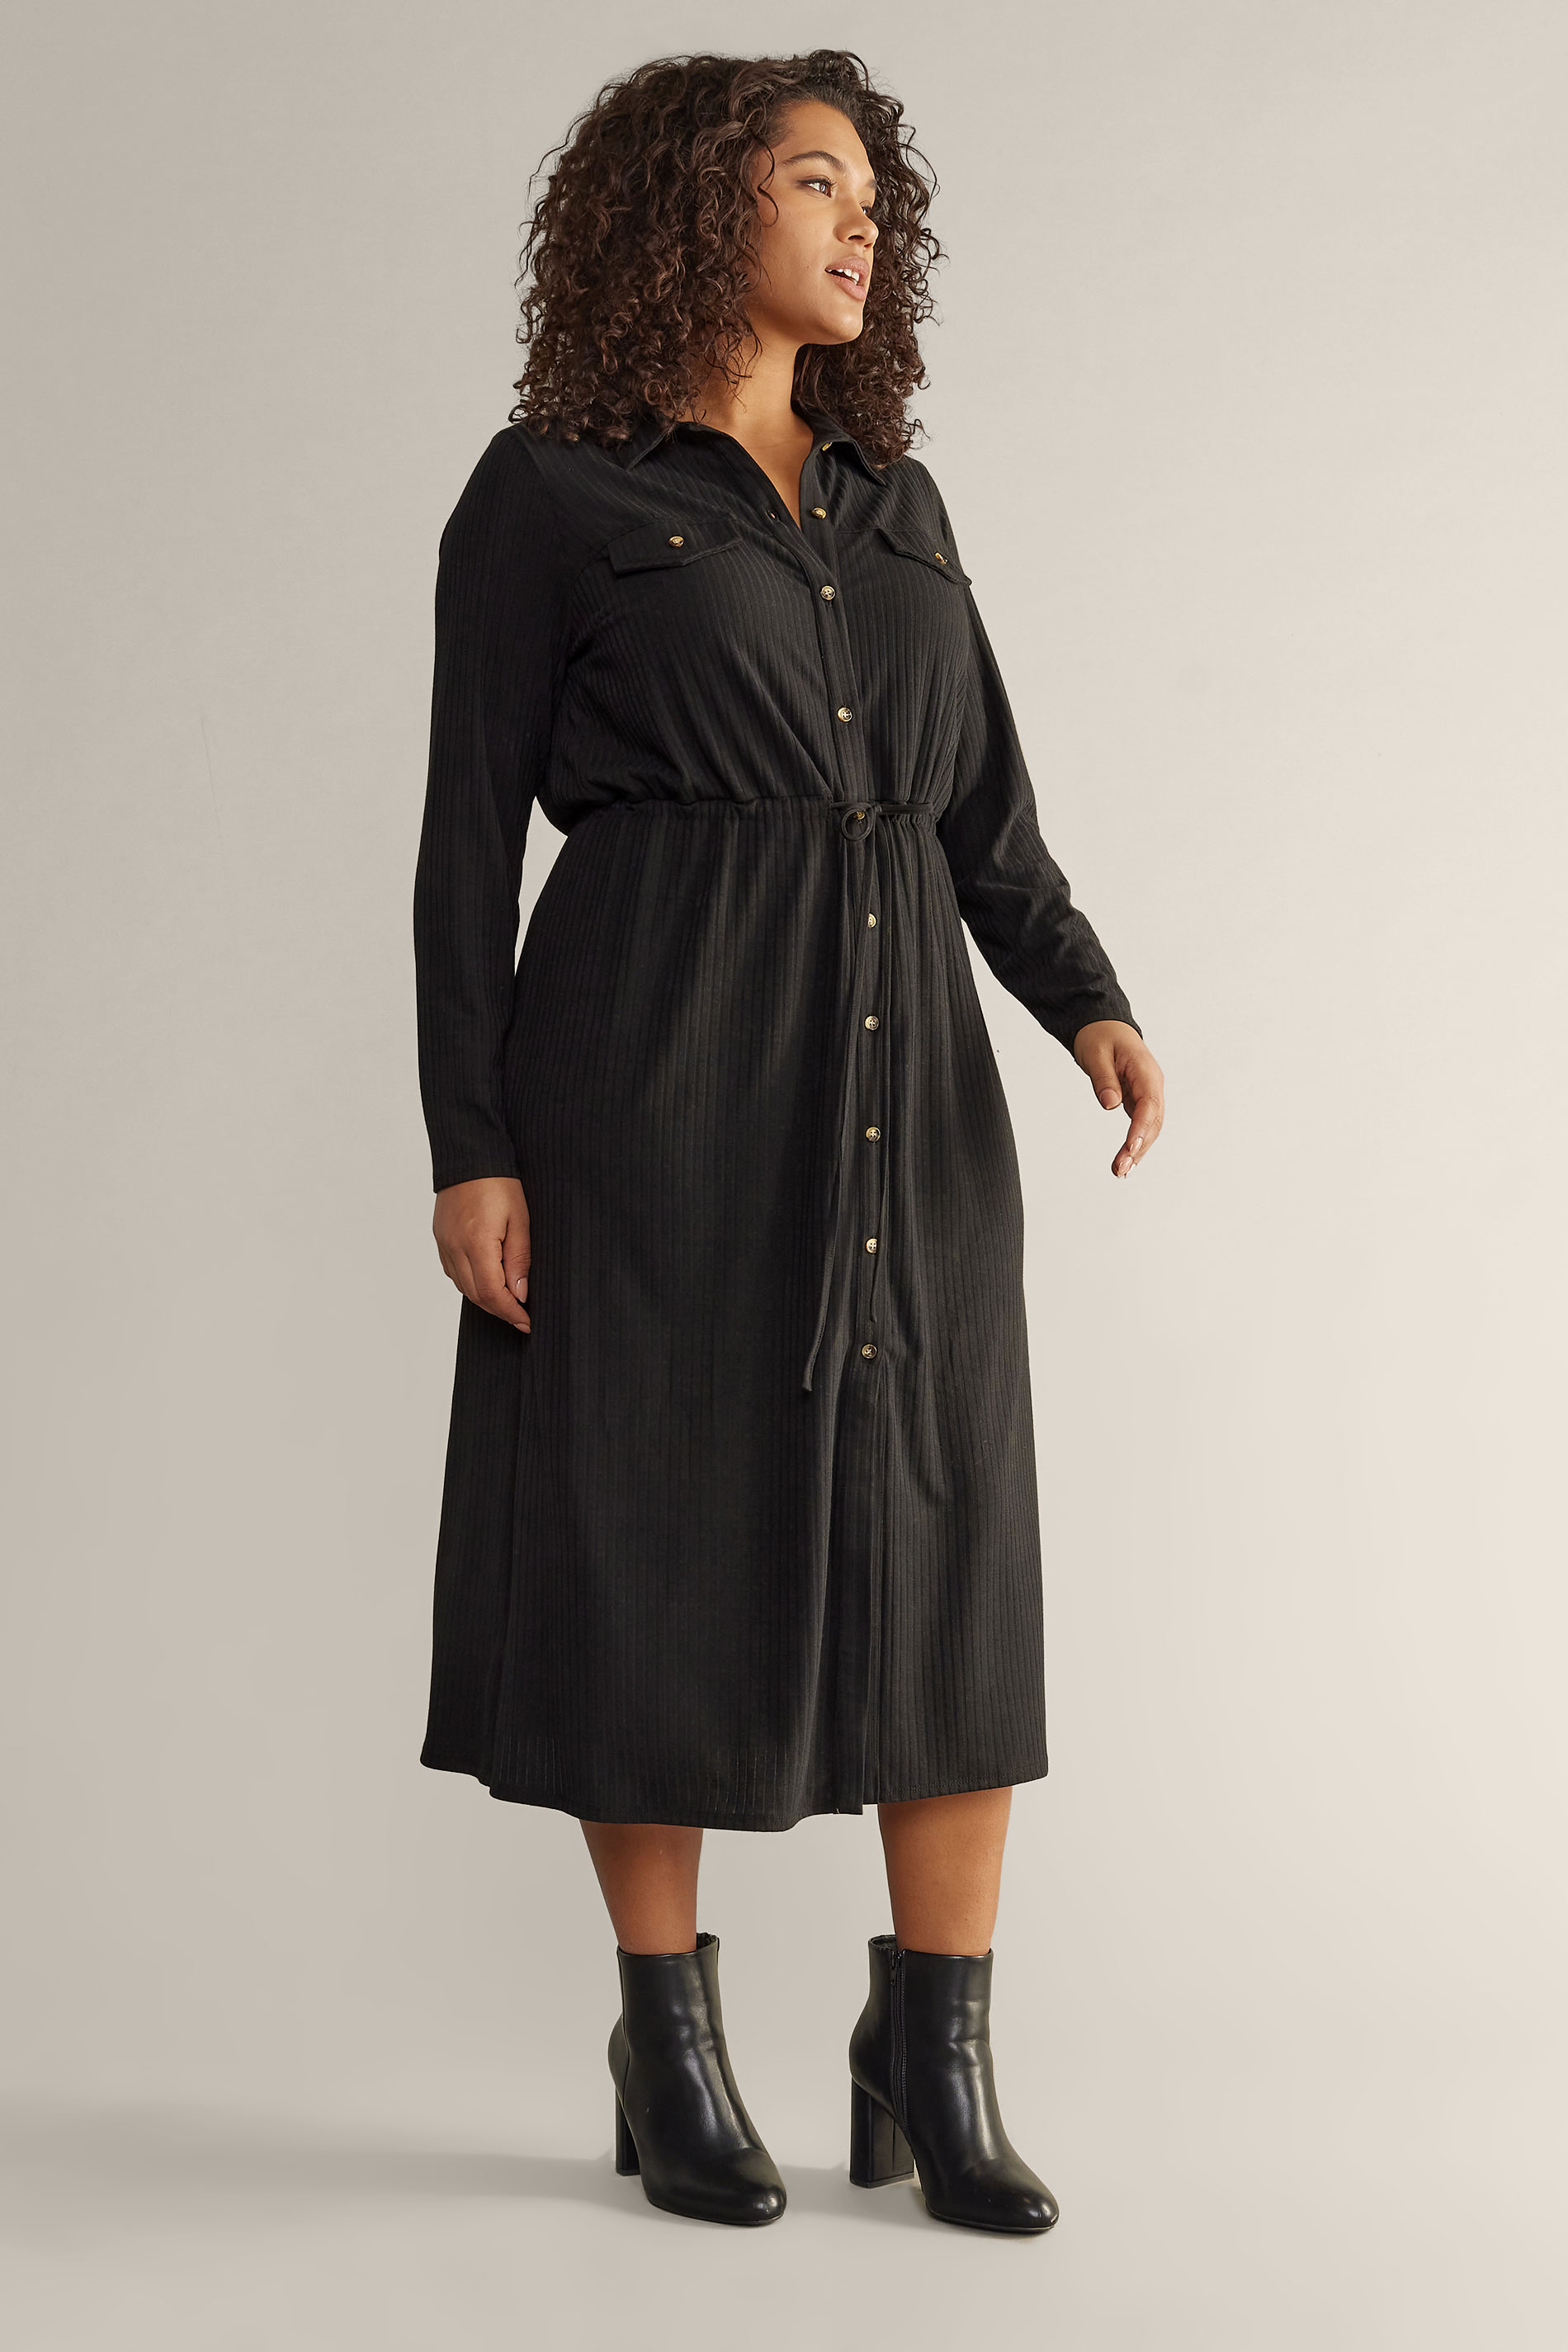 EVANS Plus Size Black Ribbed Utility Dress | Yours Clothing 3